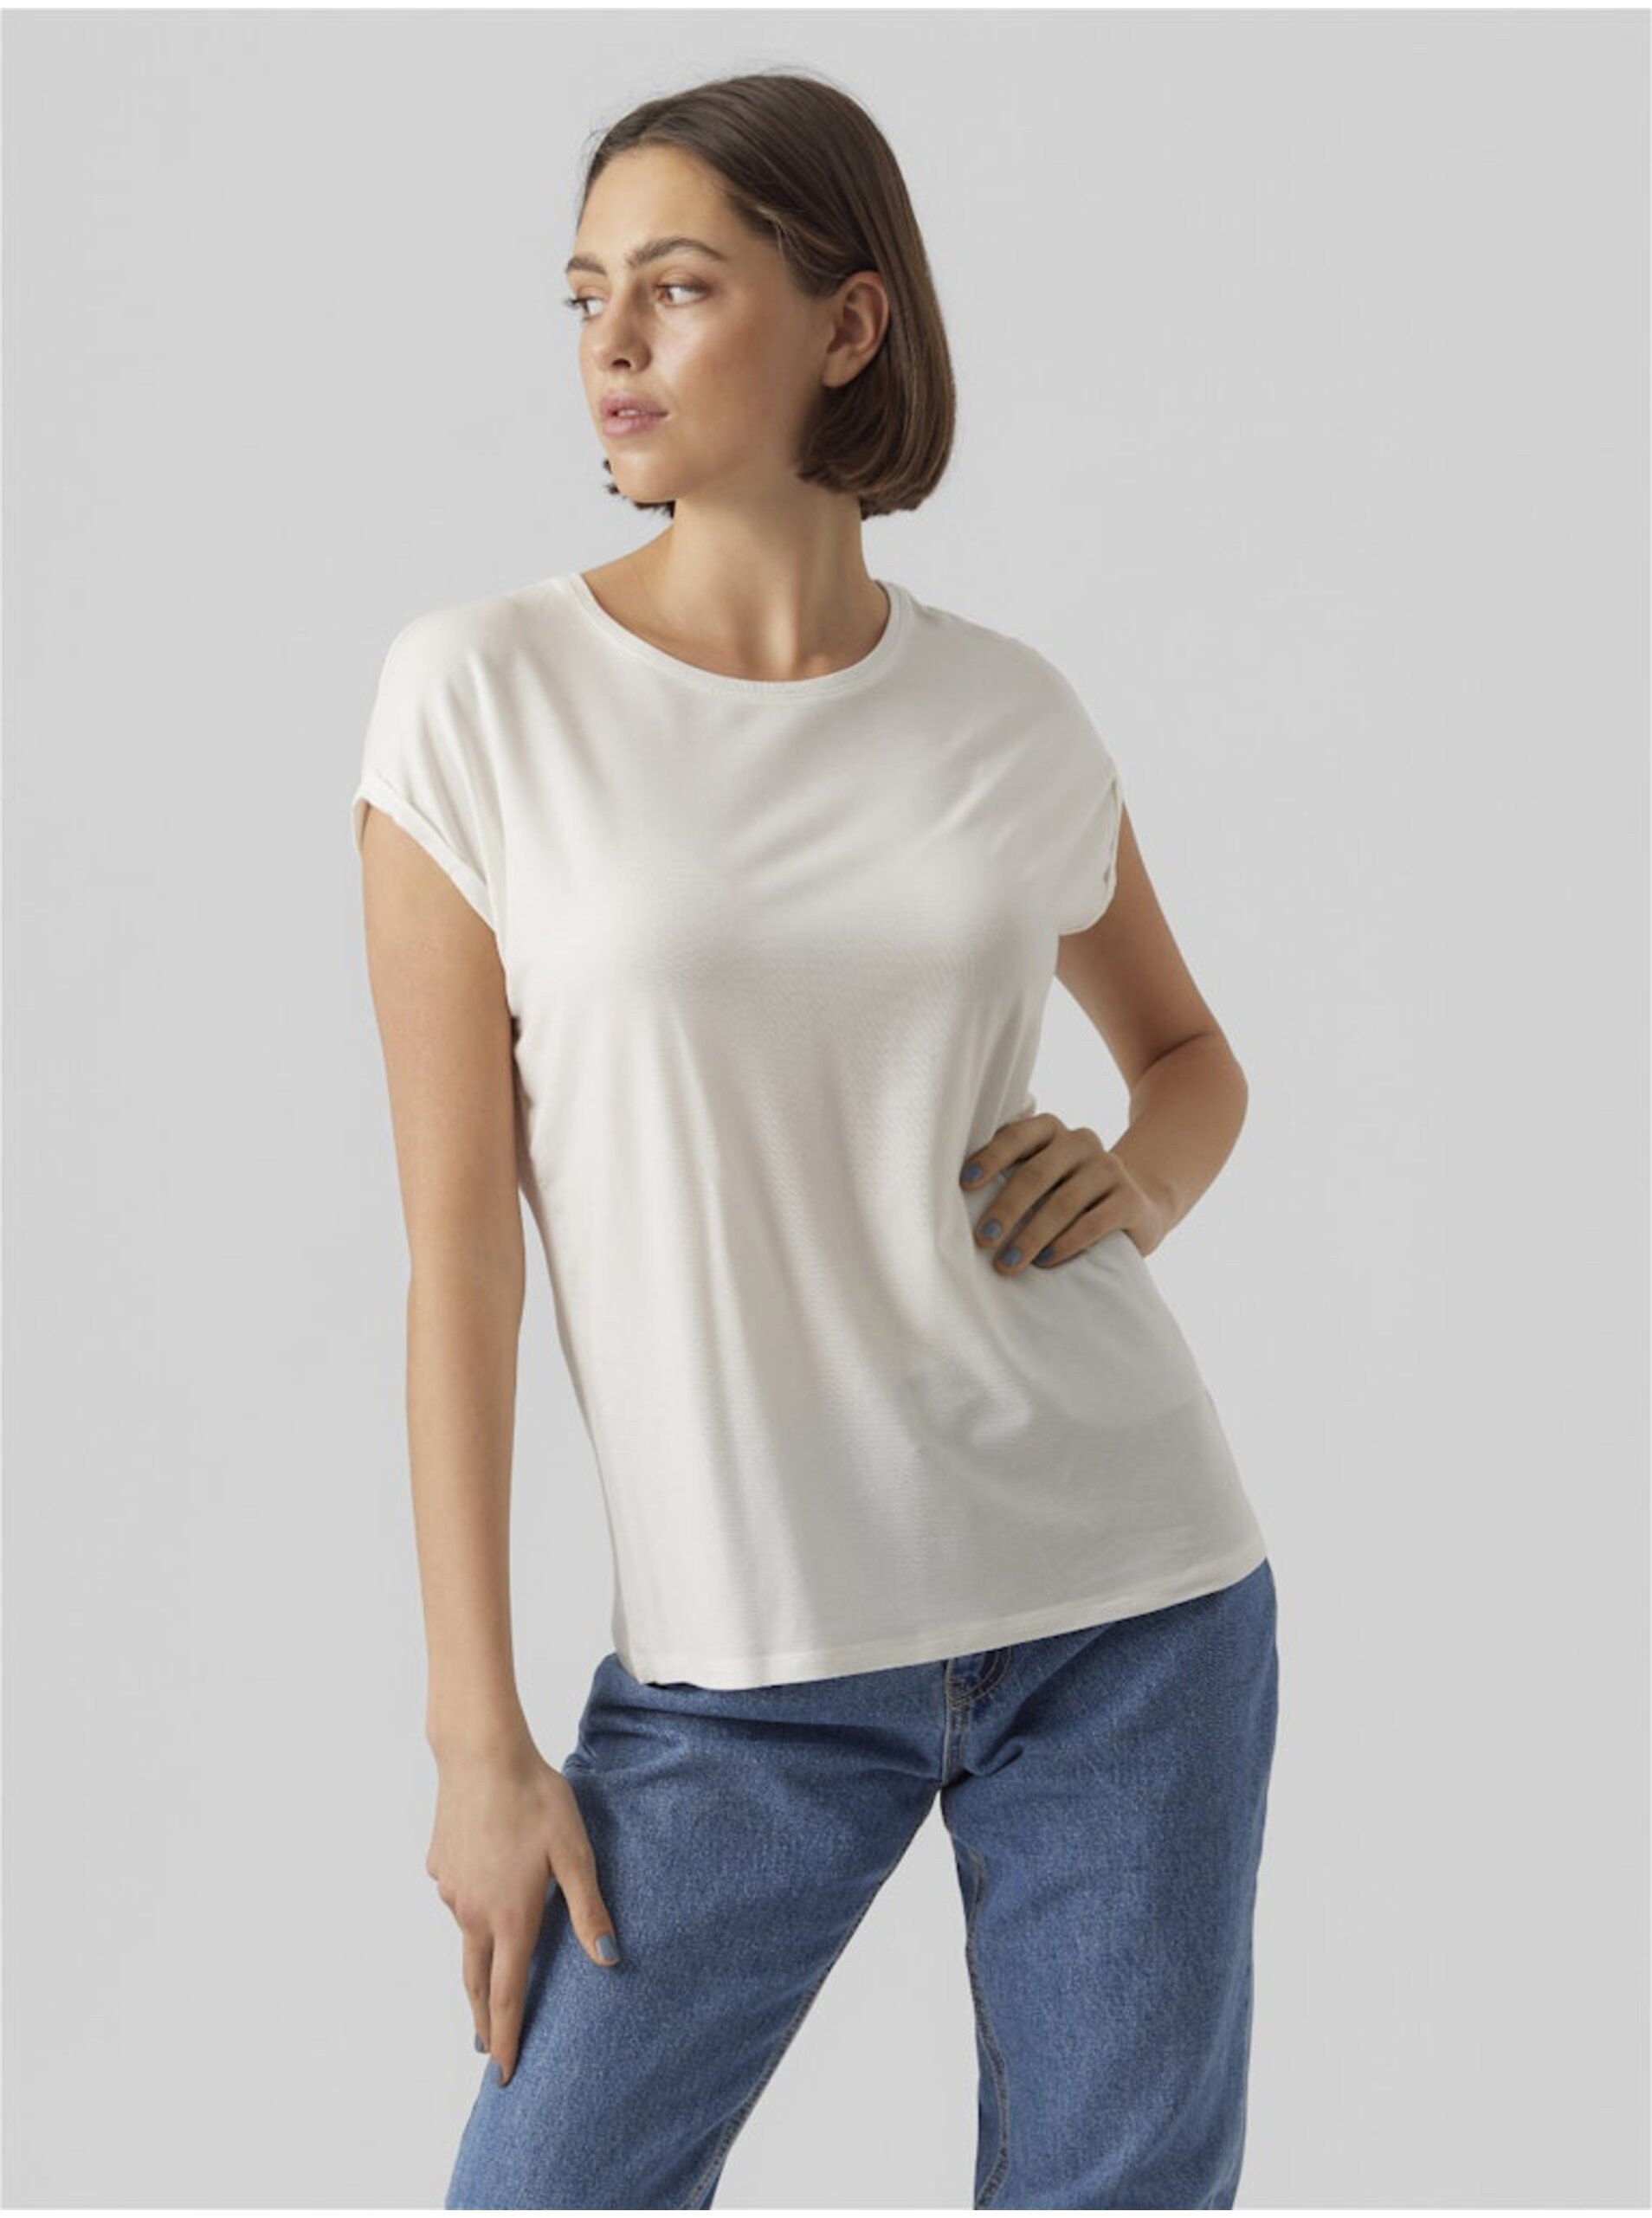 E-shop Bílé dámské tričko Vero Moda Ava